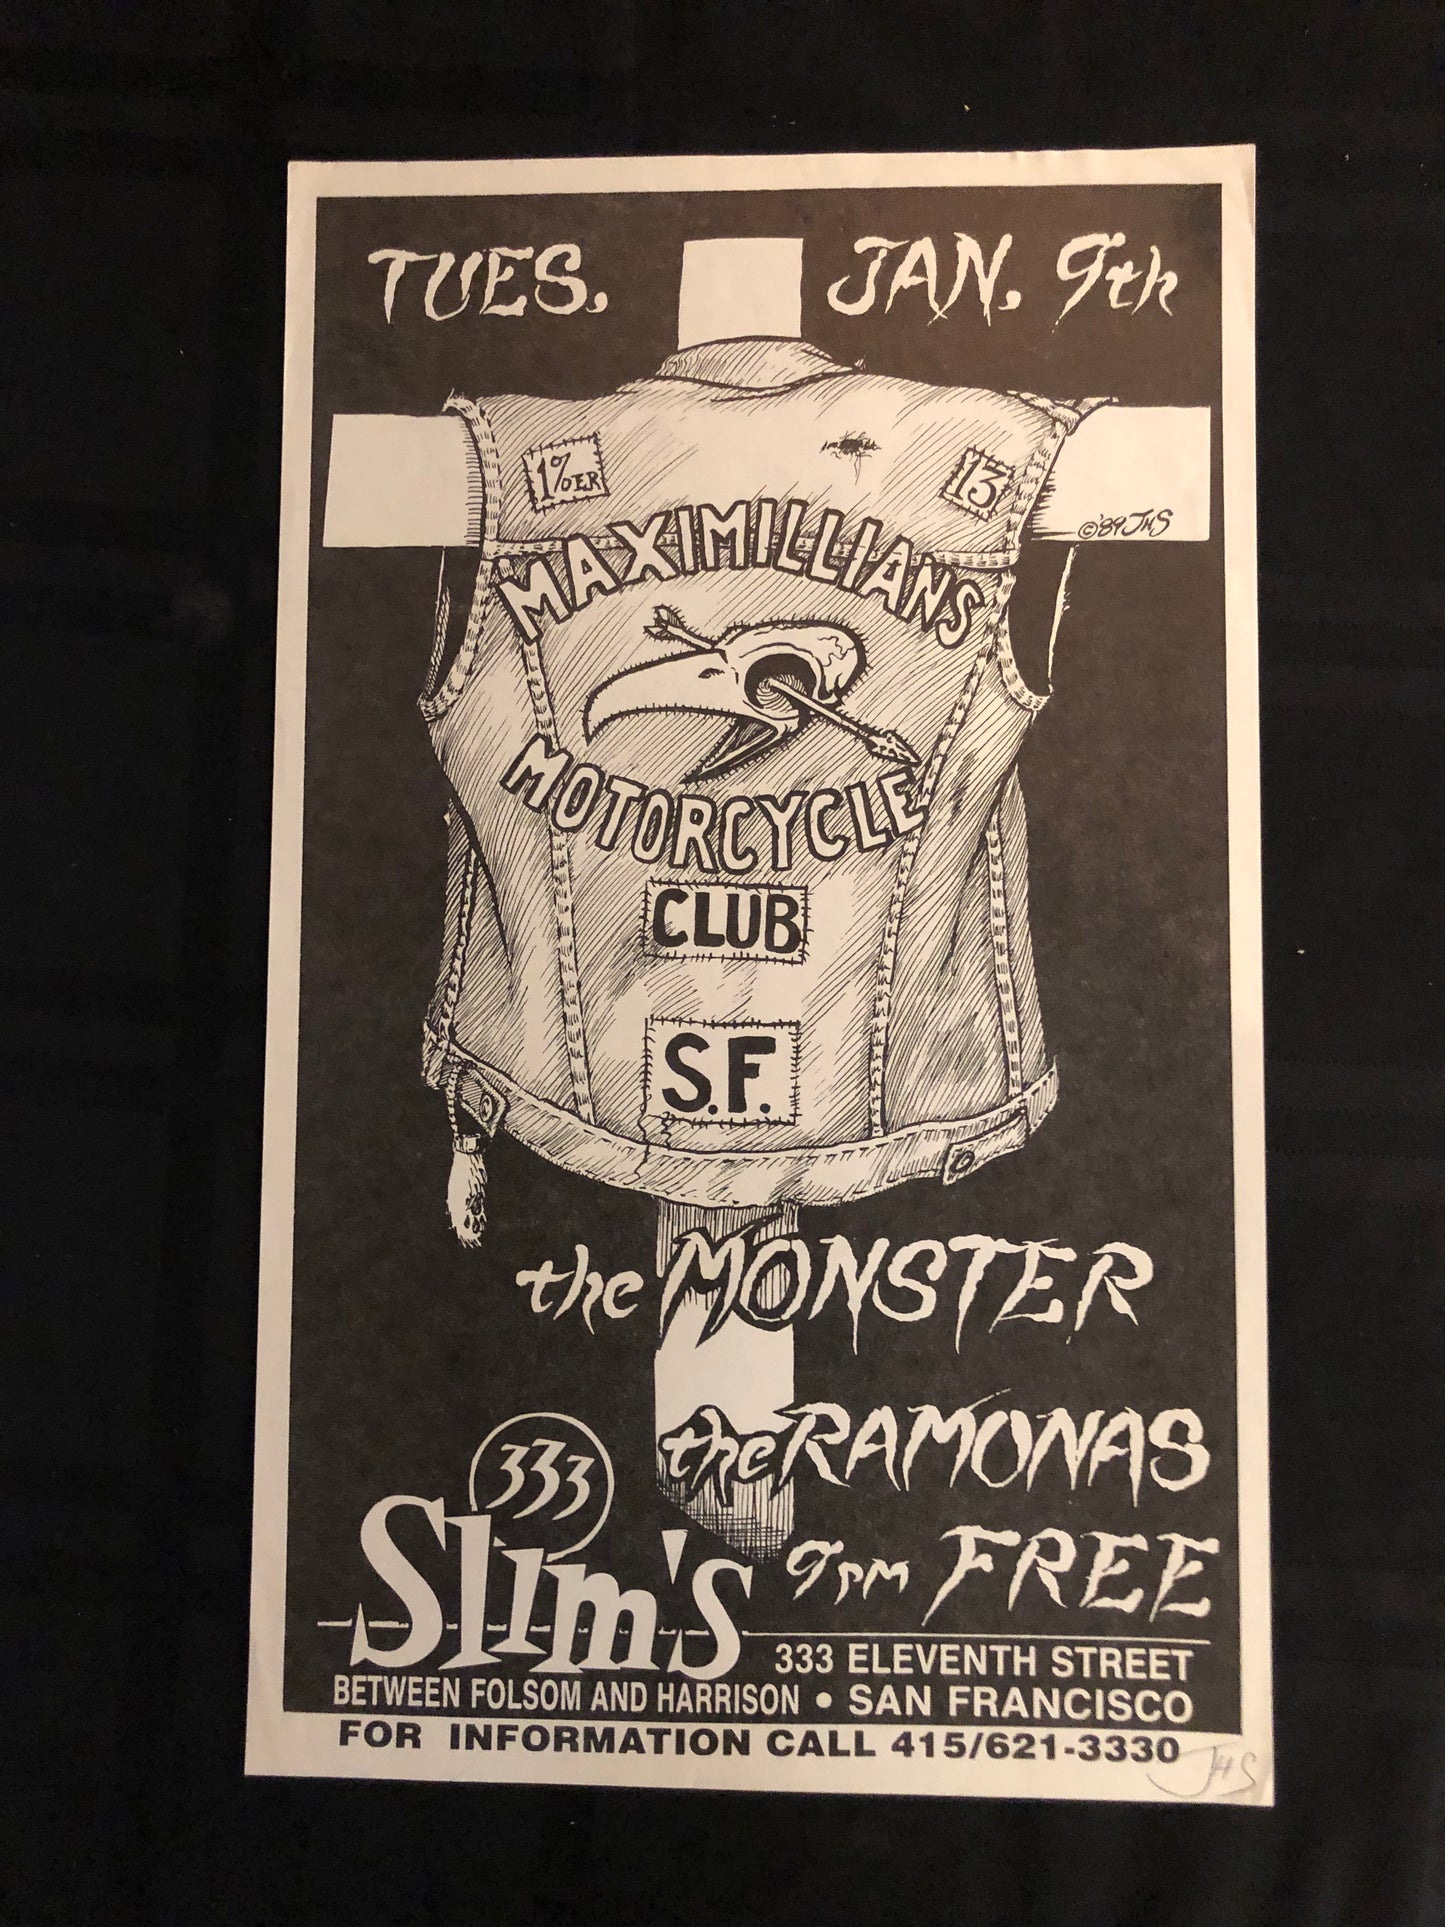 "Maximillians Motorcycle Club at Slim's" Poster